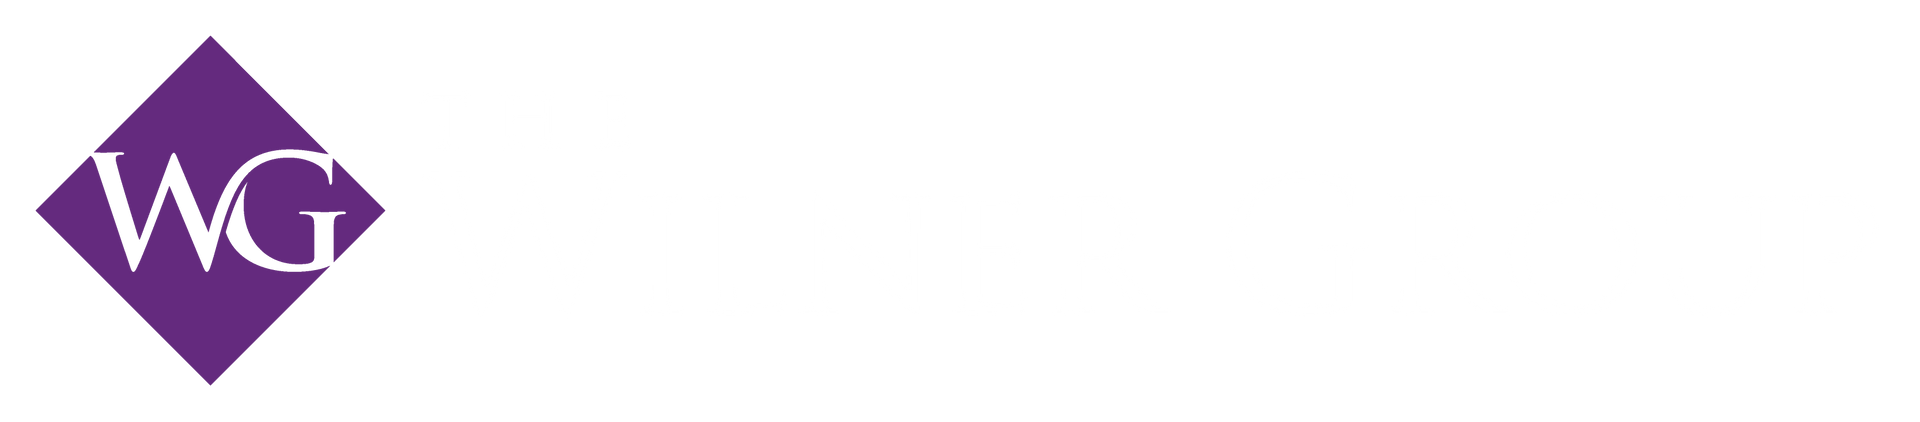 The Wilner Group Logo